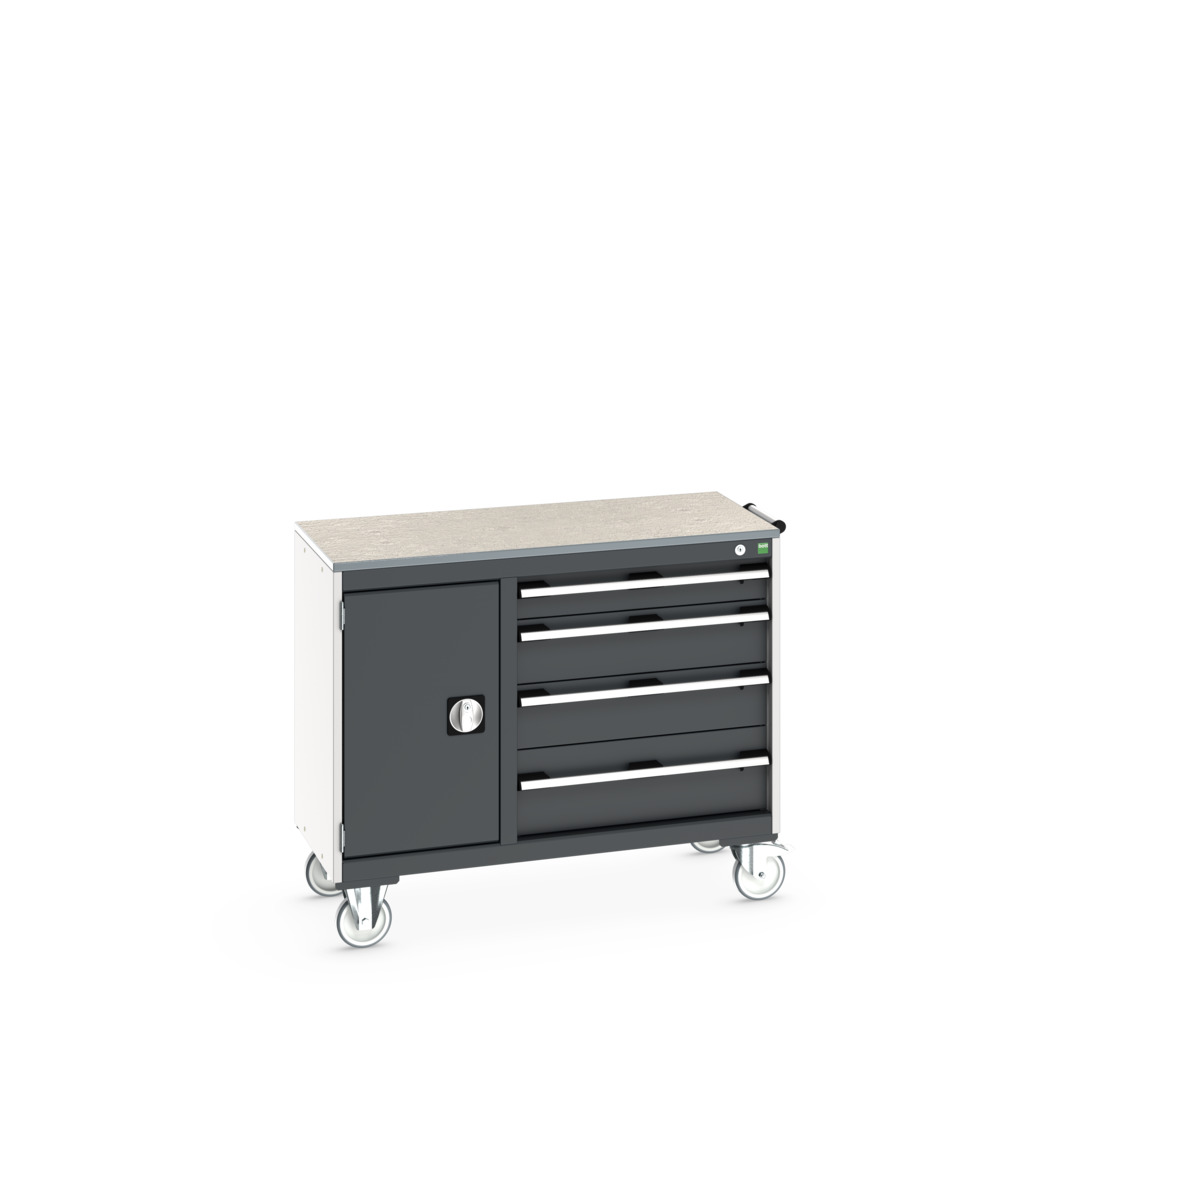 41006011. - cubio mobile cabinet 40/60 (lino)